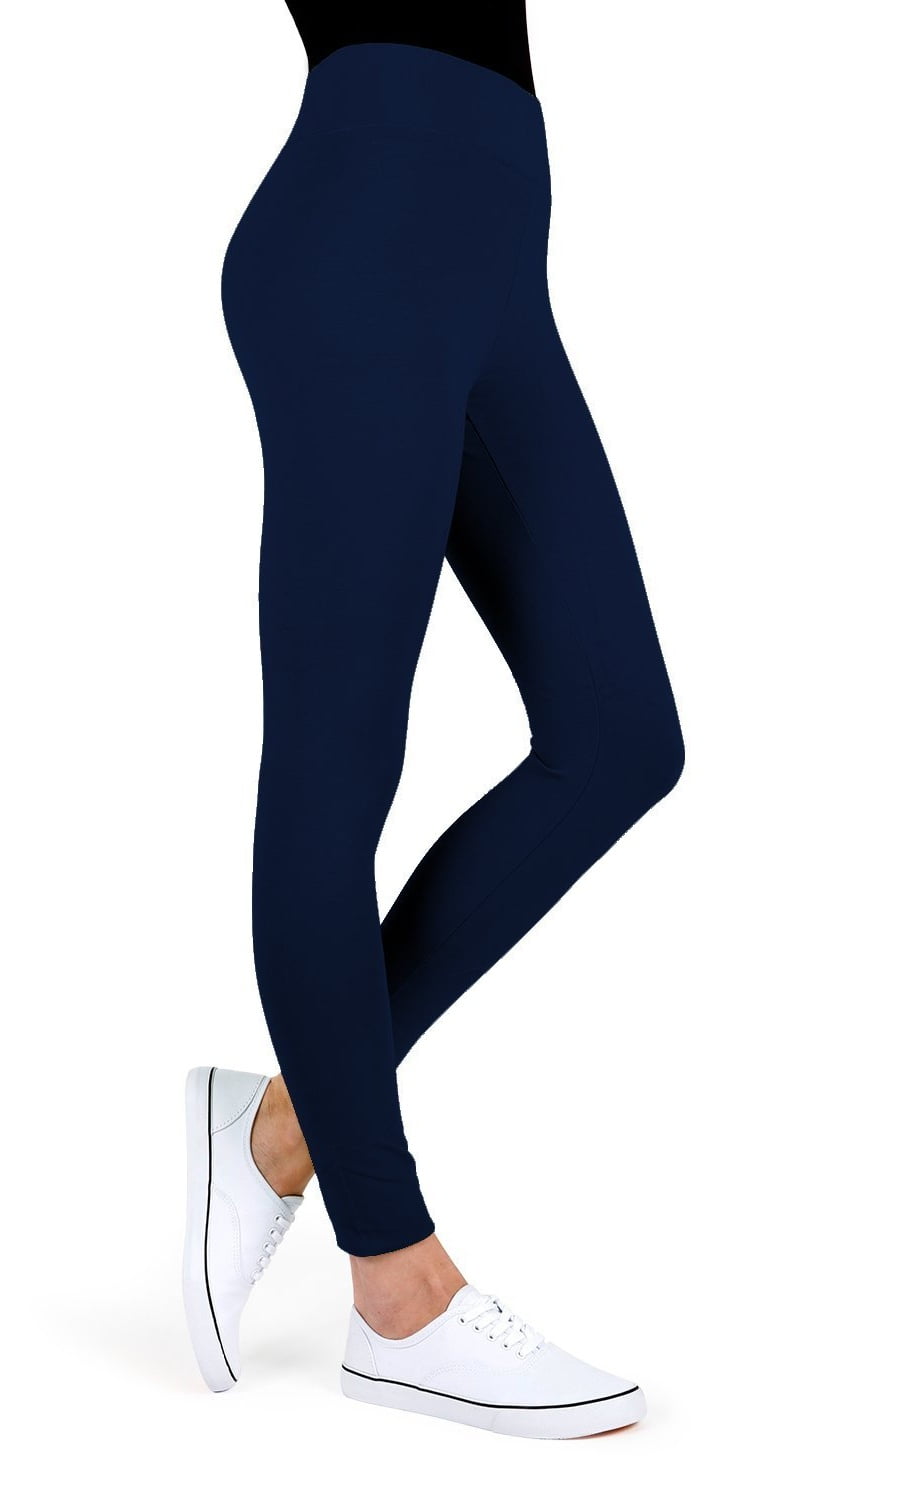 MeMoi - MeMoi Cotton-Blend Yoga Pants | Sport & Athletic Leggings by MeMoi  Navy / Small/Medium - Walmart.com - Walmart.com